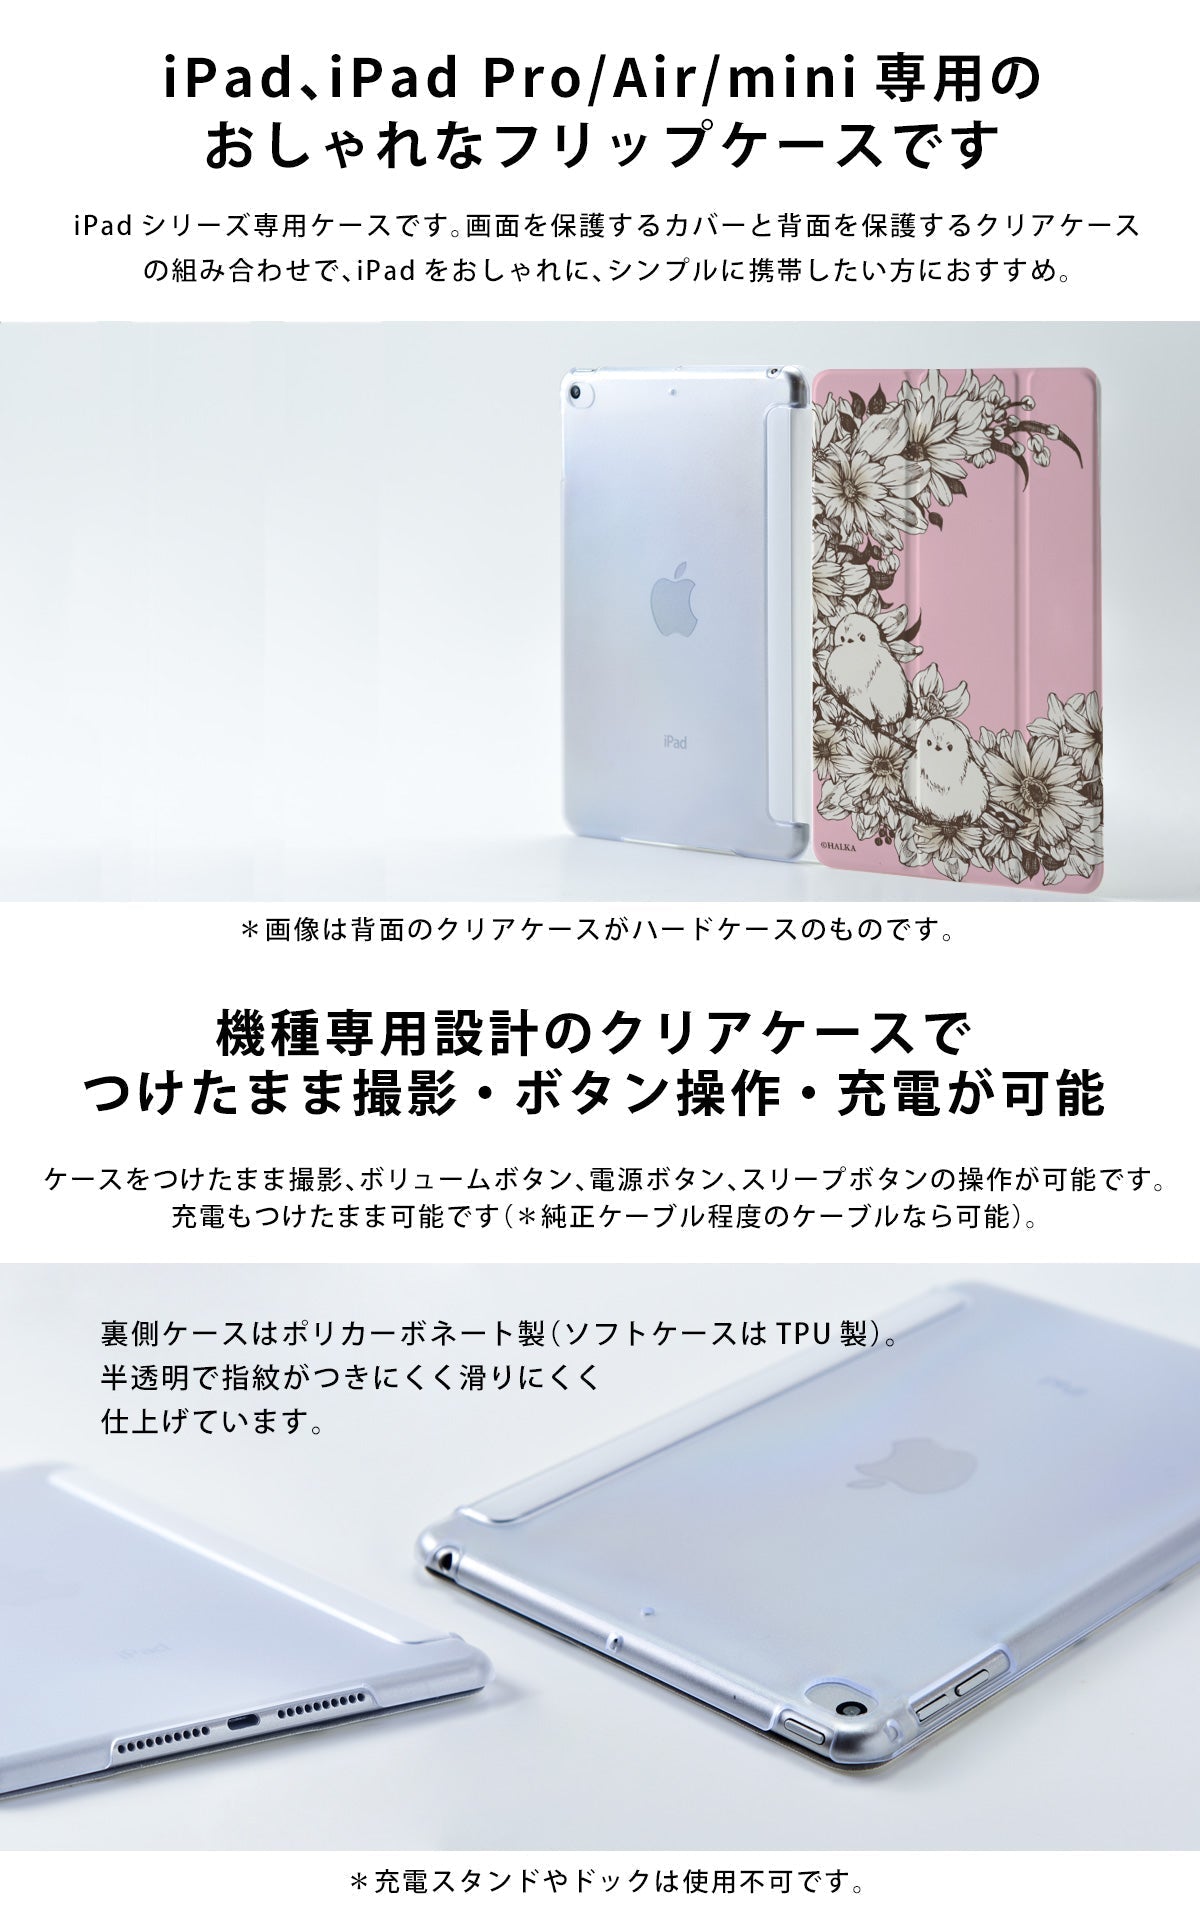 iPad ケース Air 5/4/3/2/1 10.9インチ iPadAir5 iPadケース おしゃれ 可愛い シマエナガ